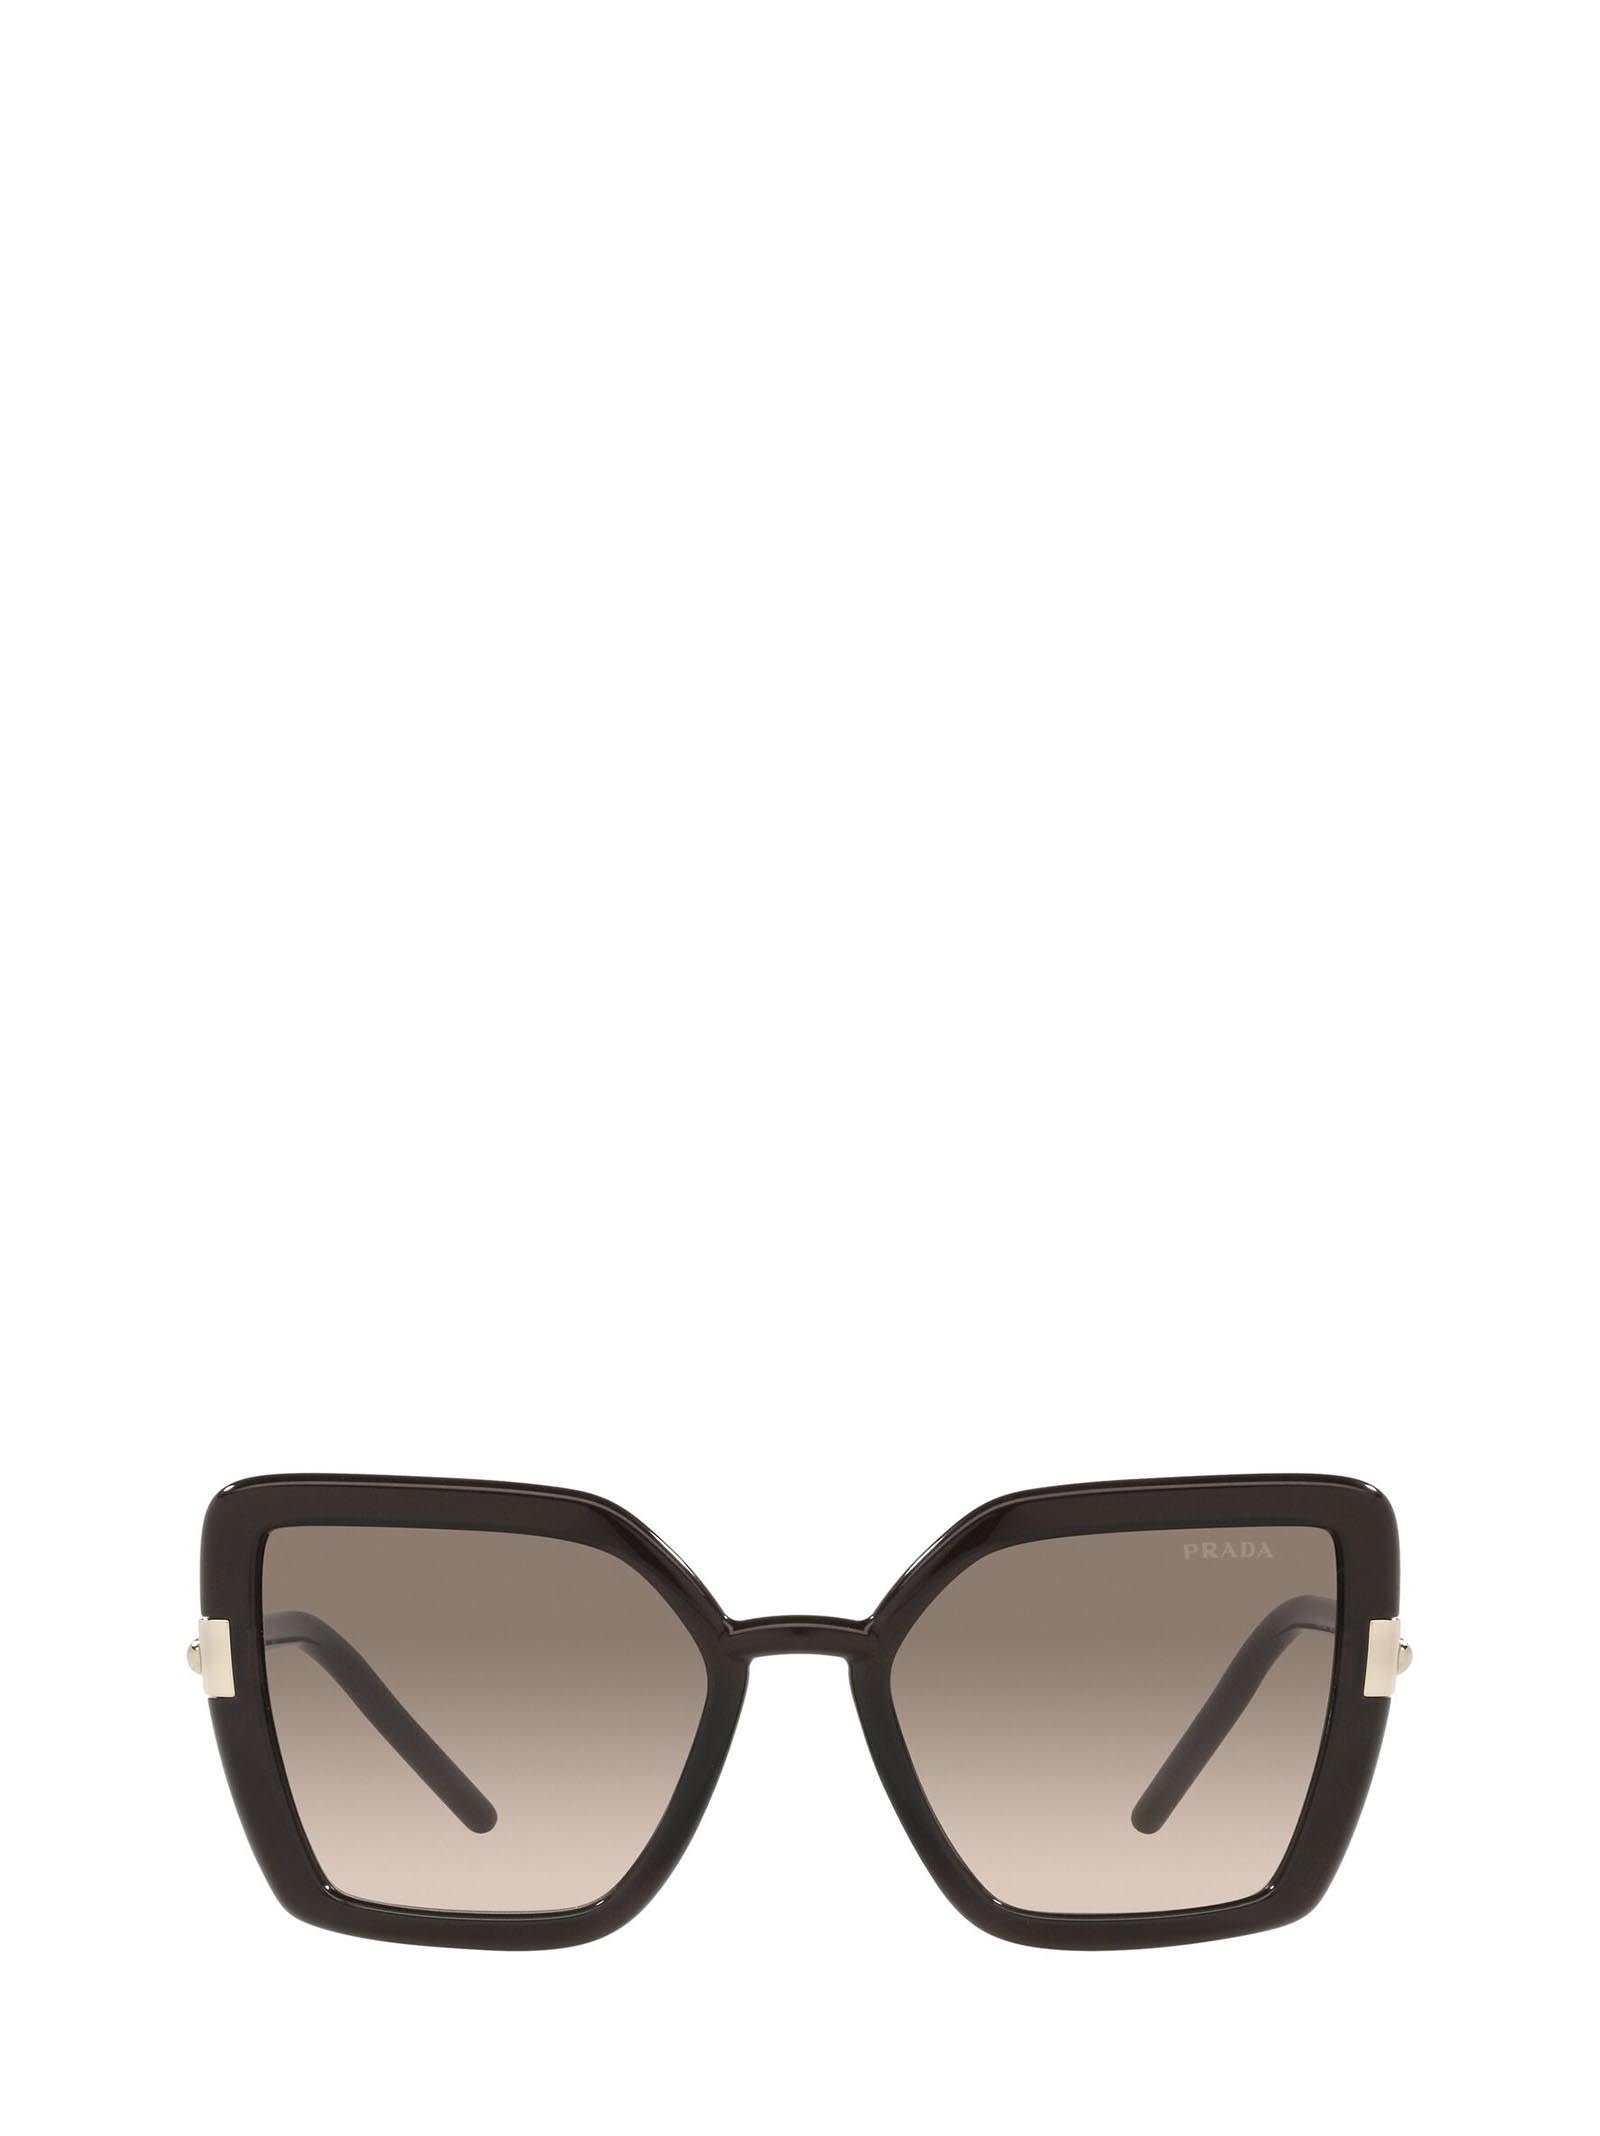 Prada Prada Pr 09ws Crystal Dark Brown Sunglasses